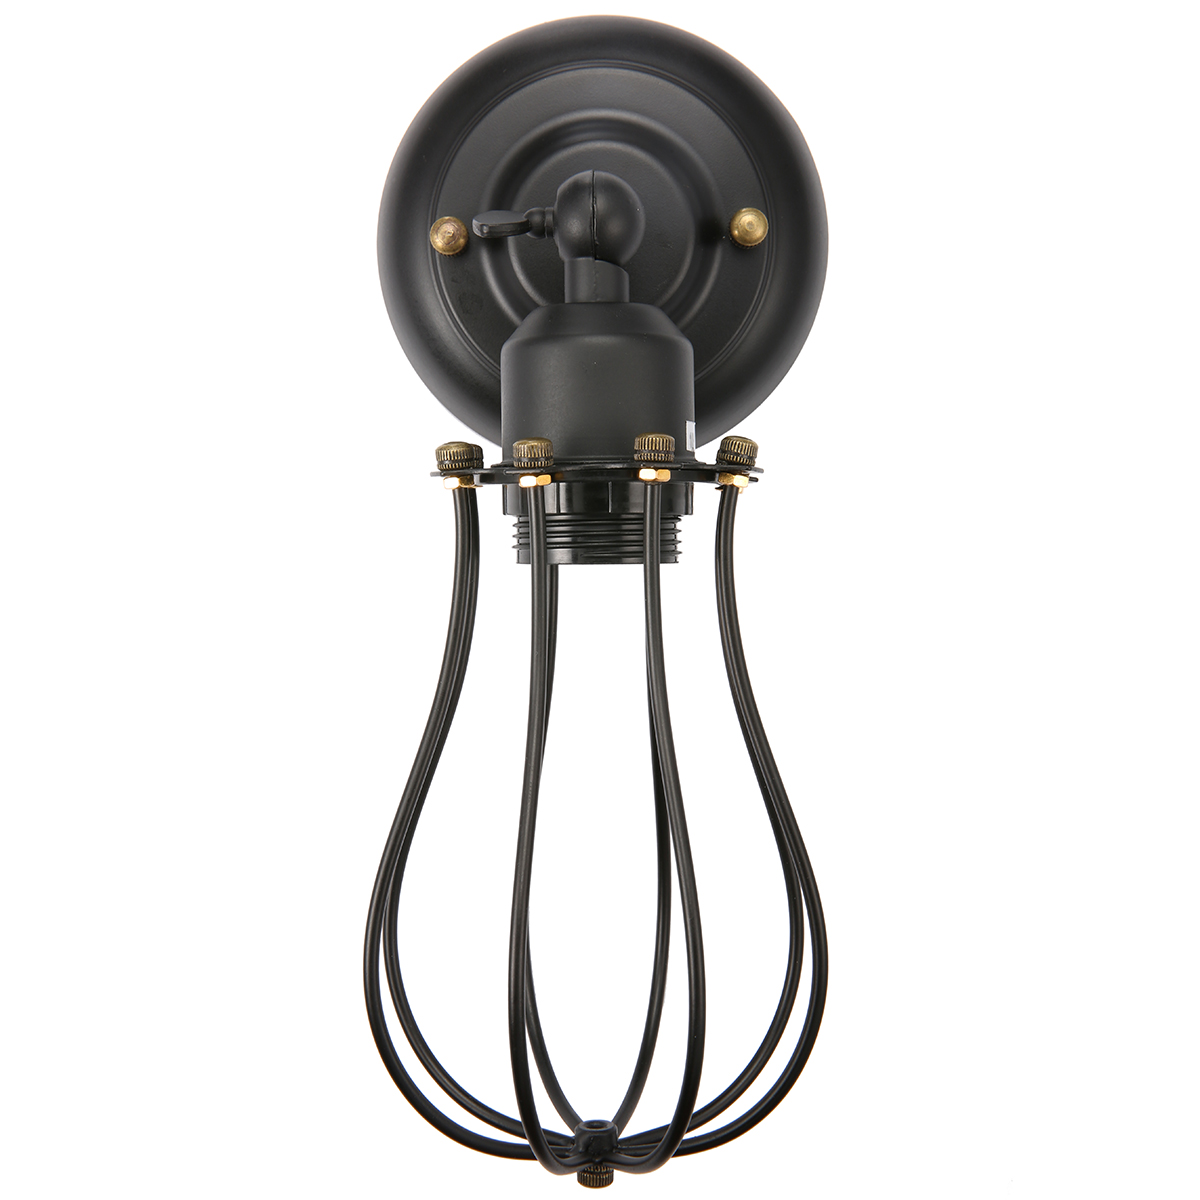 KINGSO-2Pcs-110V-E26-Vintage-Wall-Light-Without-Bulbs-Industrial-Lighting-Adjustable-Socket-Rustic-S-1867406-8